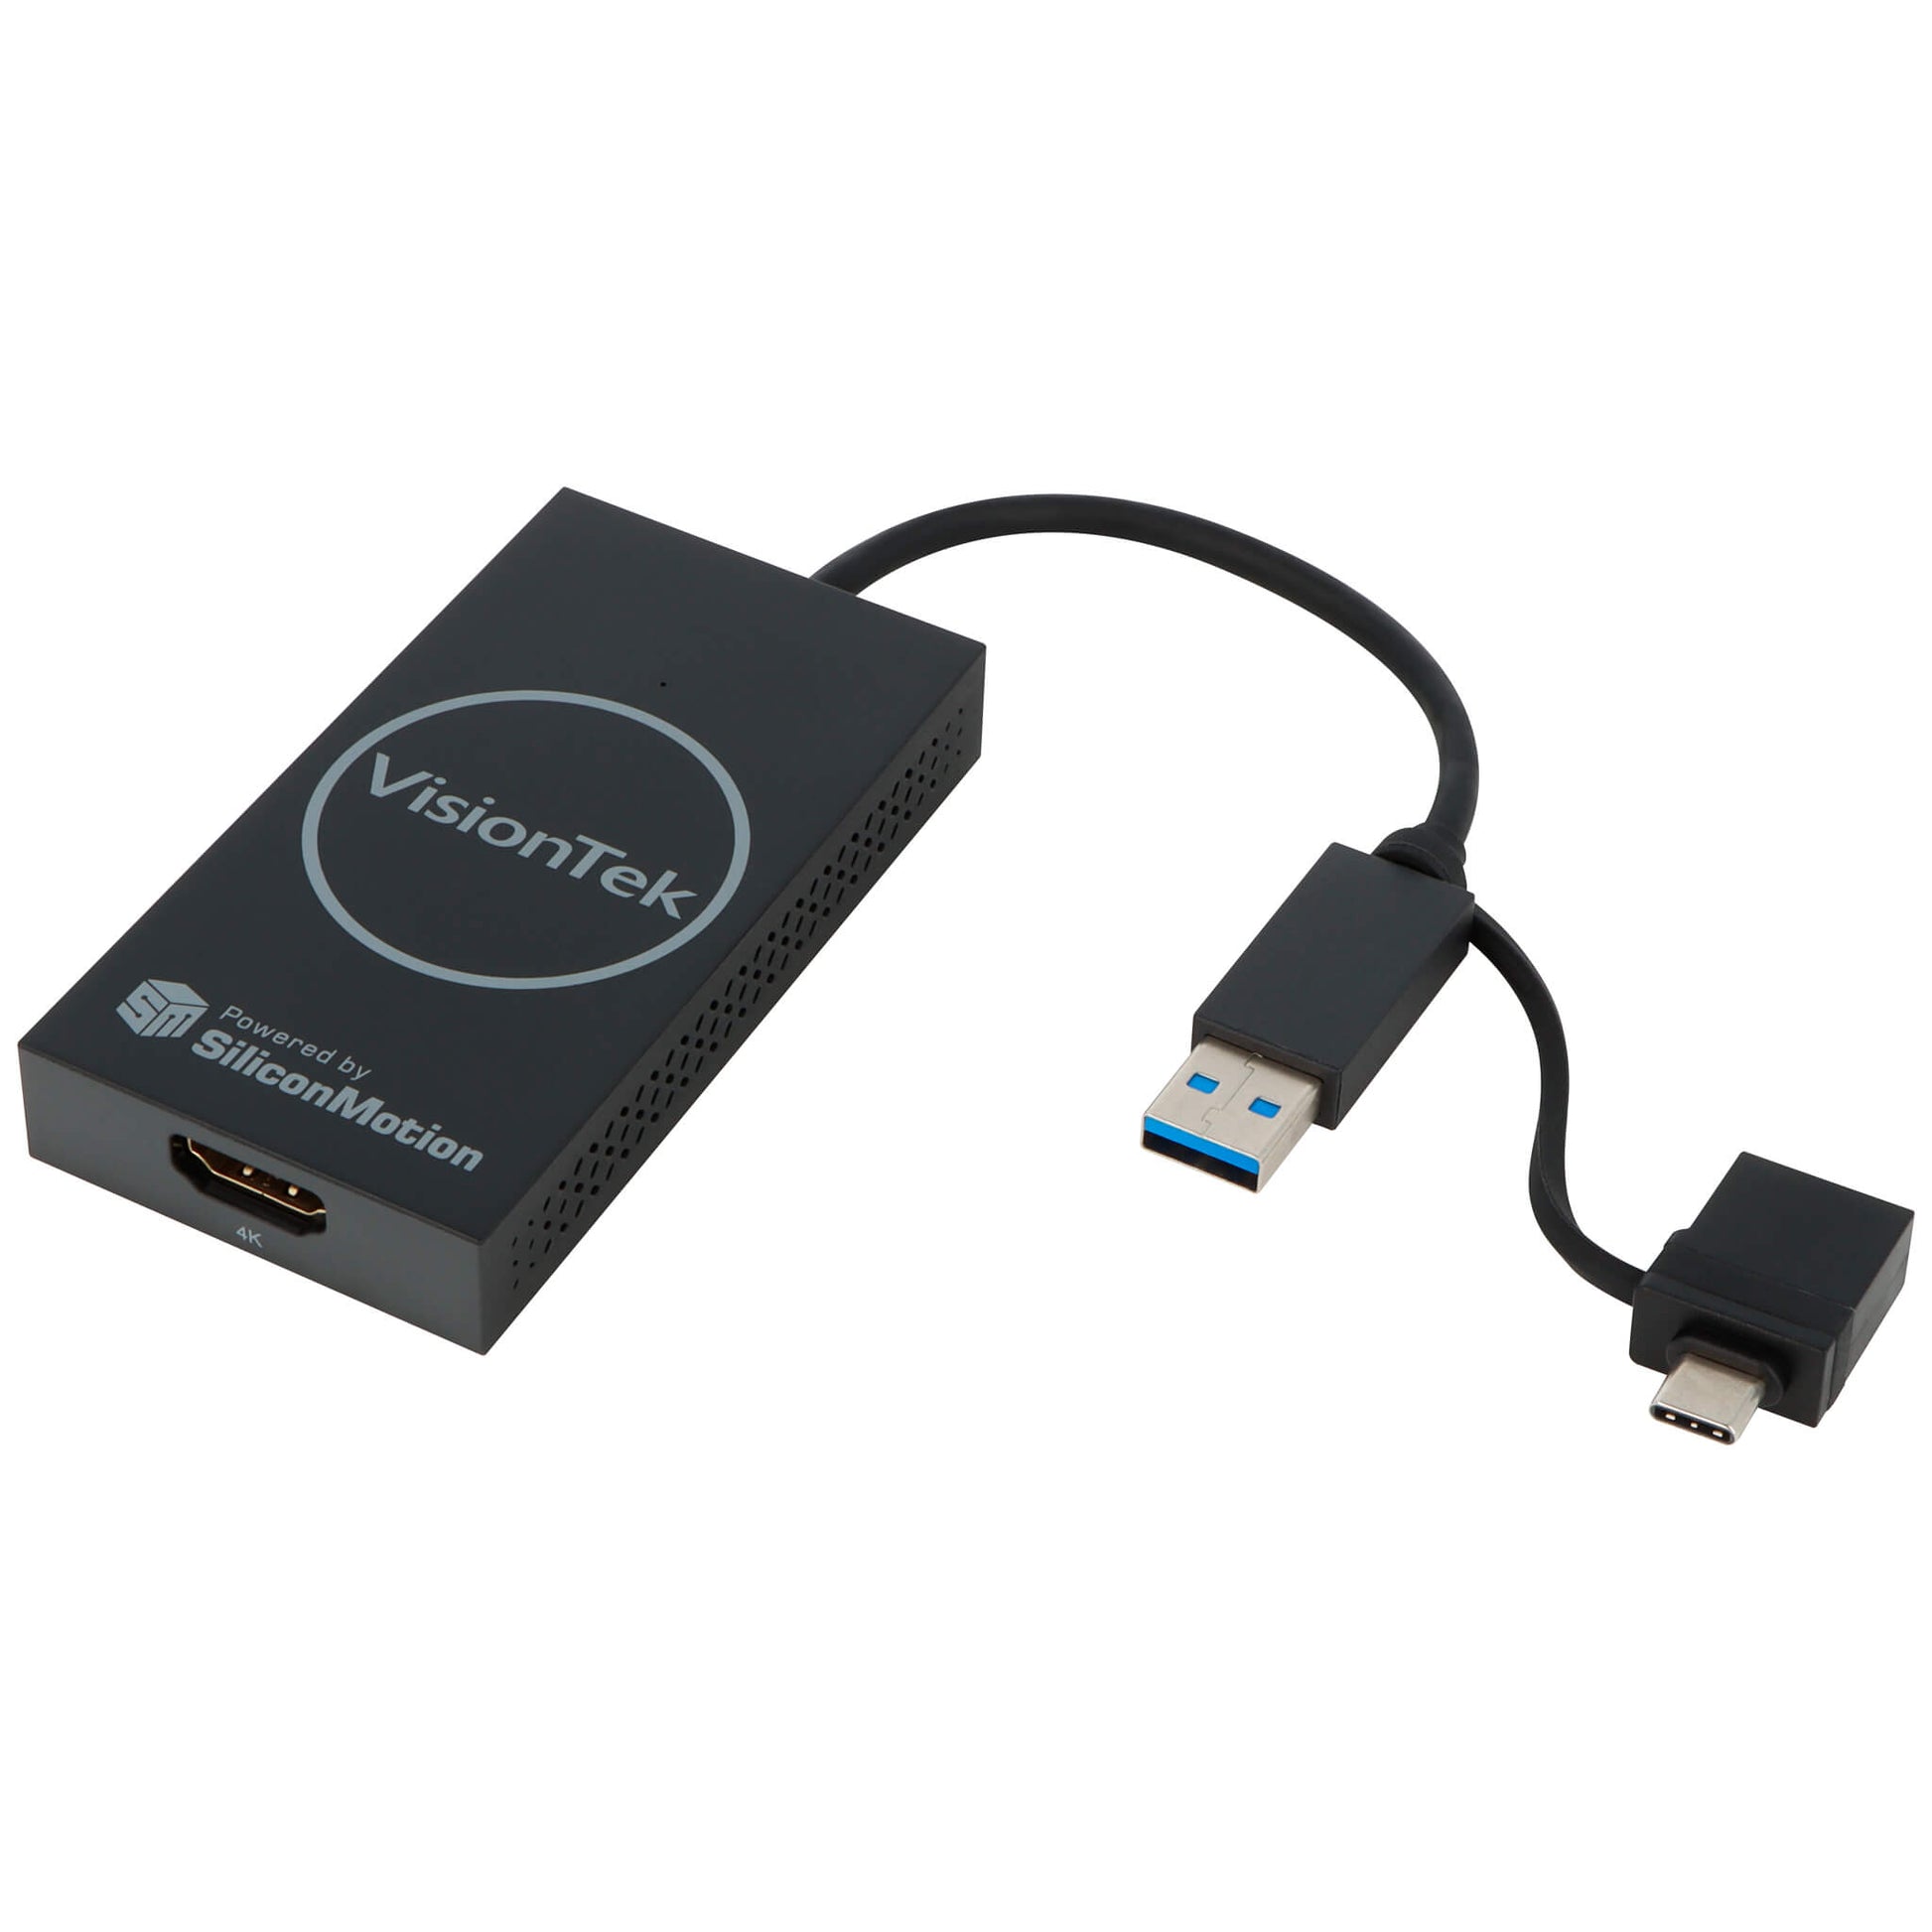 USB 3.0 to HDMI, Full HD Adapter